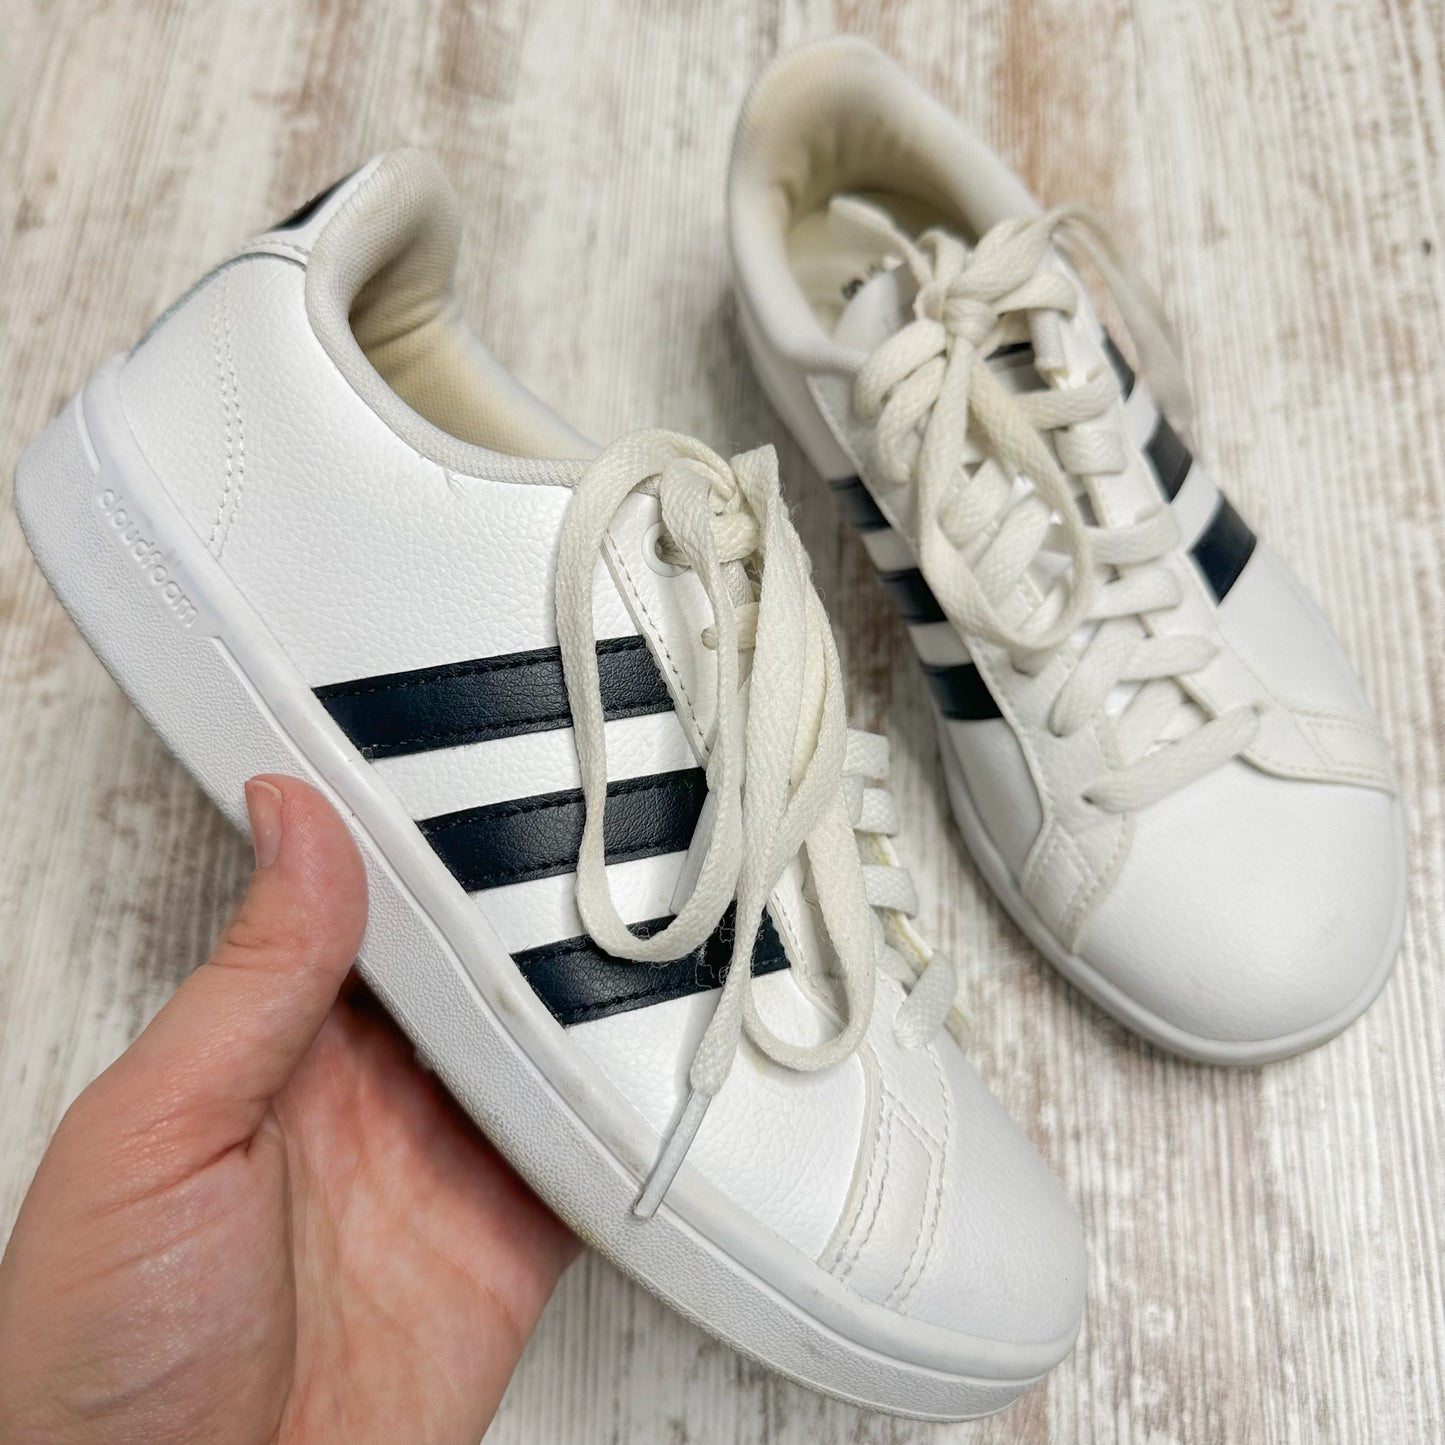 Adidas Classic Grand Court Tennis Shoe Size 6